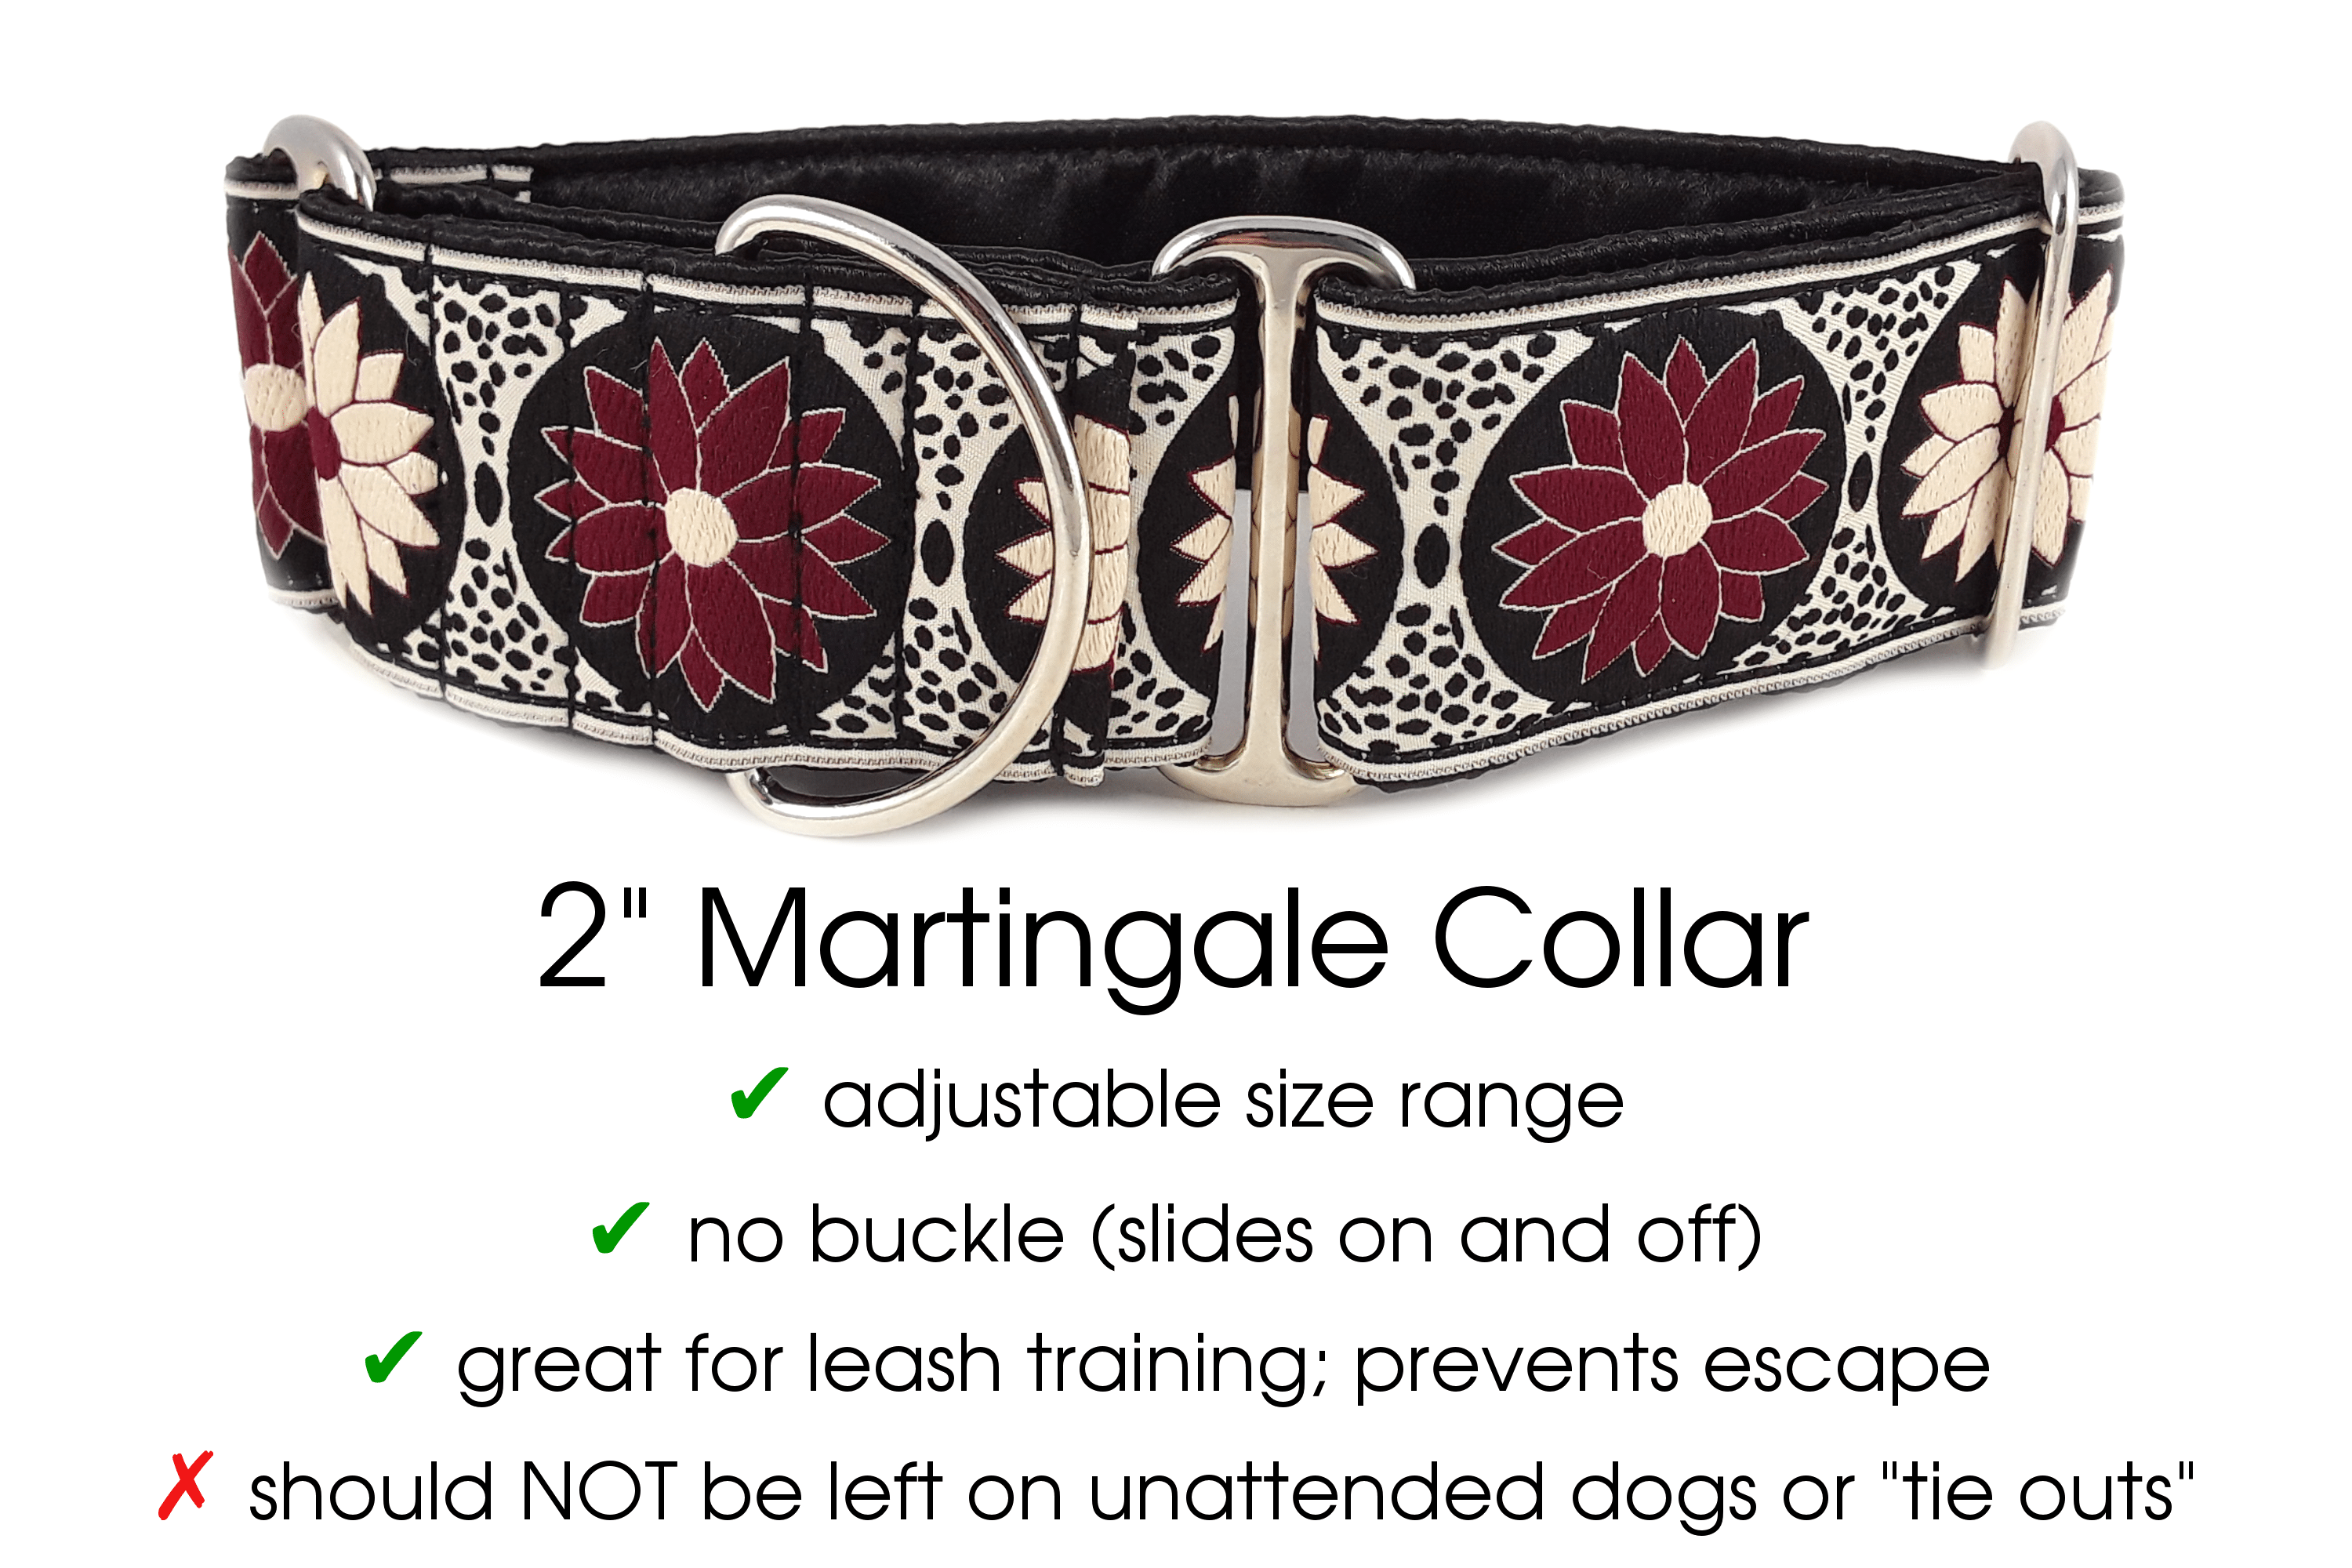 Daisy Chains in Burgundy - Martingale Dog Collar or Buckle Dog Collar - 2" Width - The Hound Haberdashery